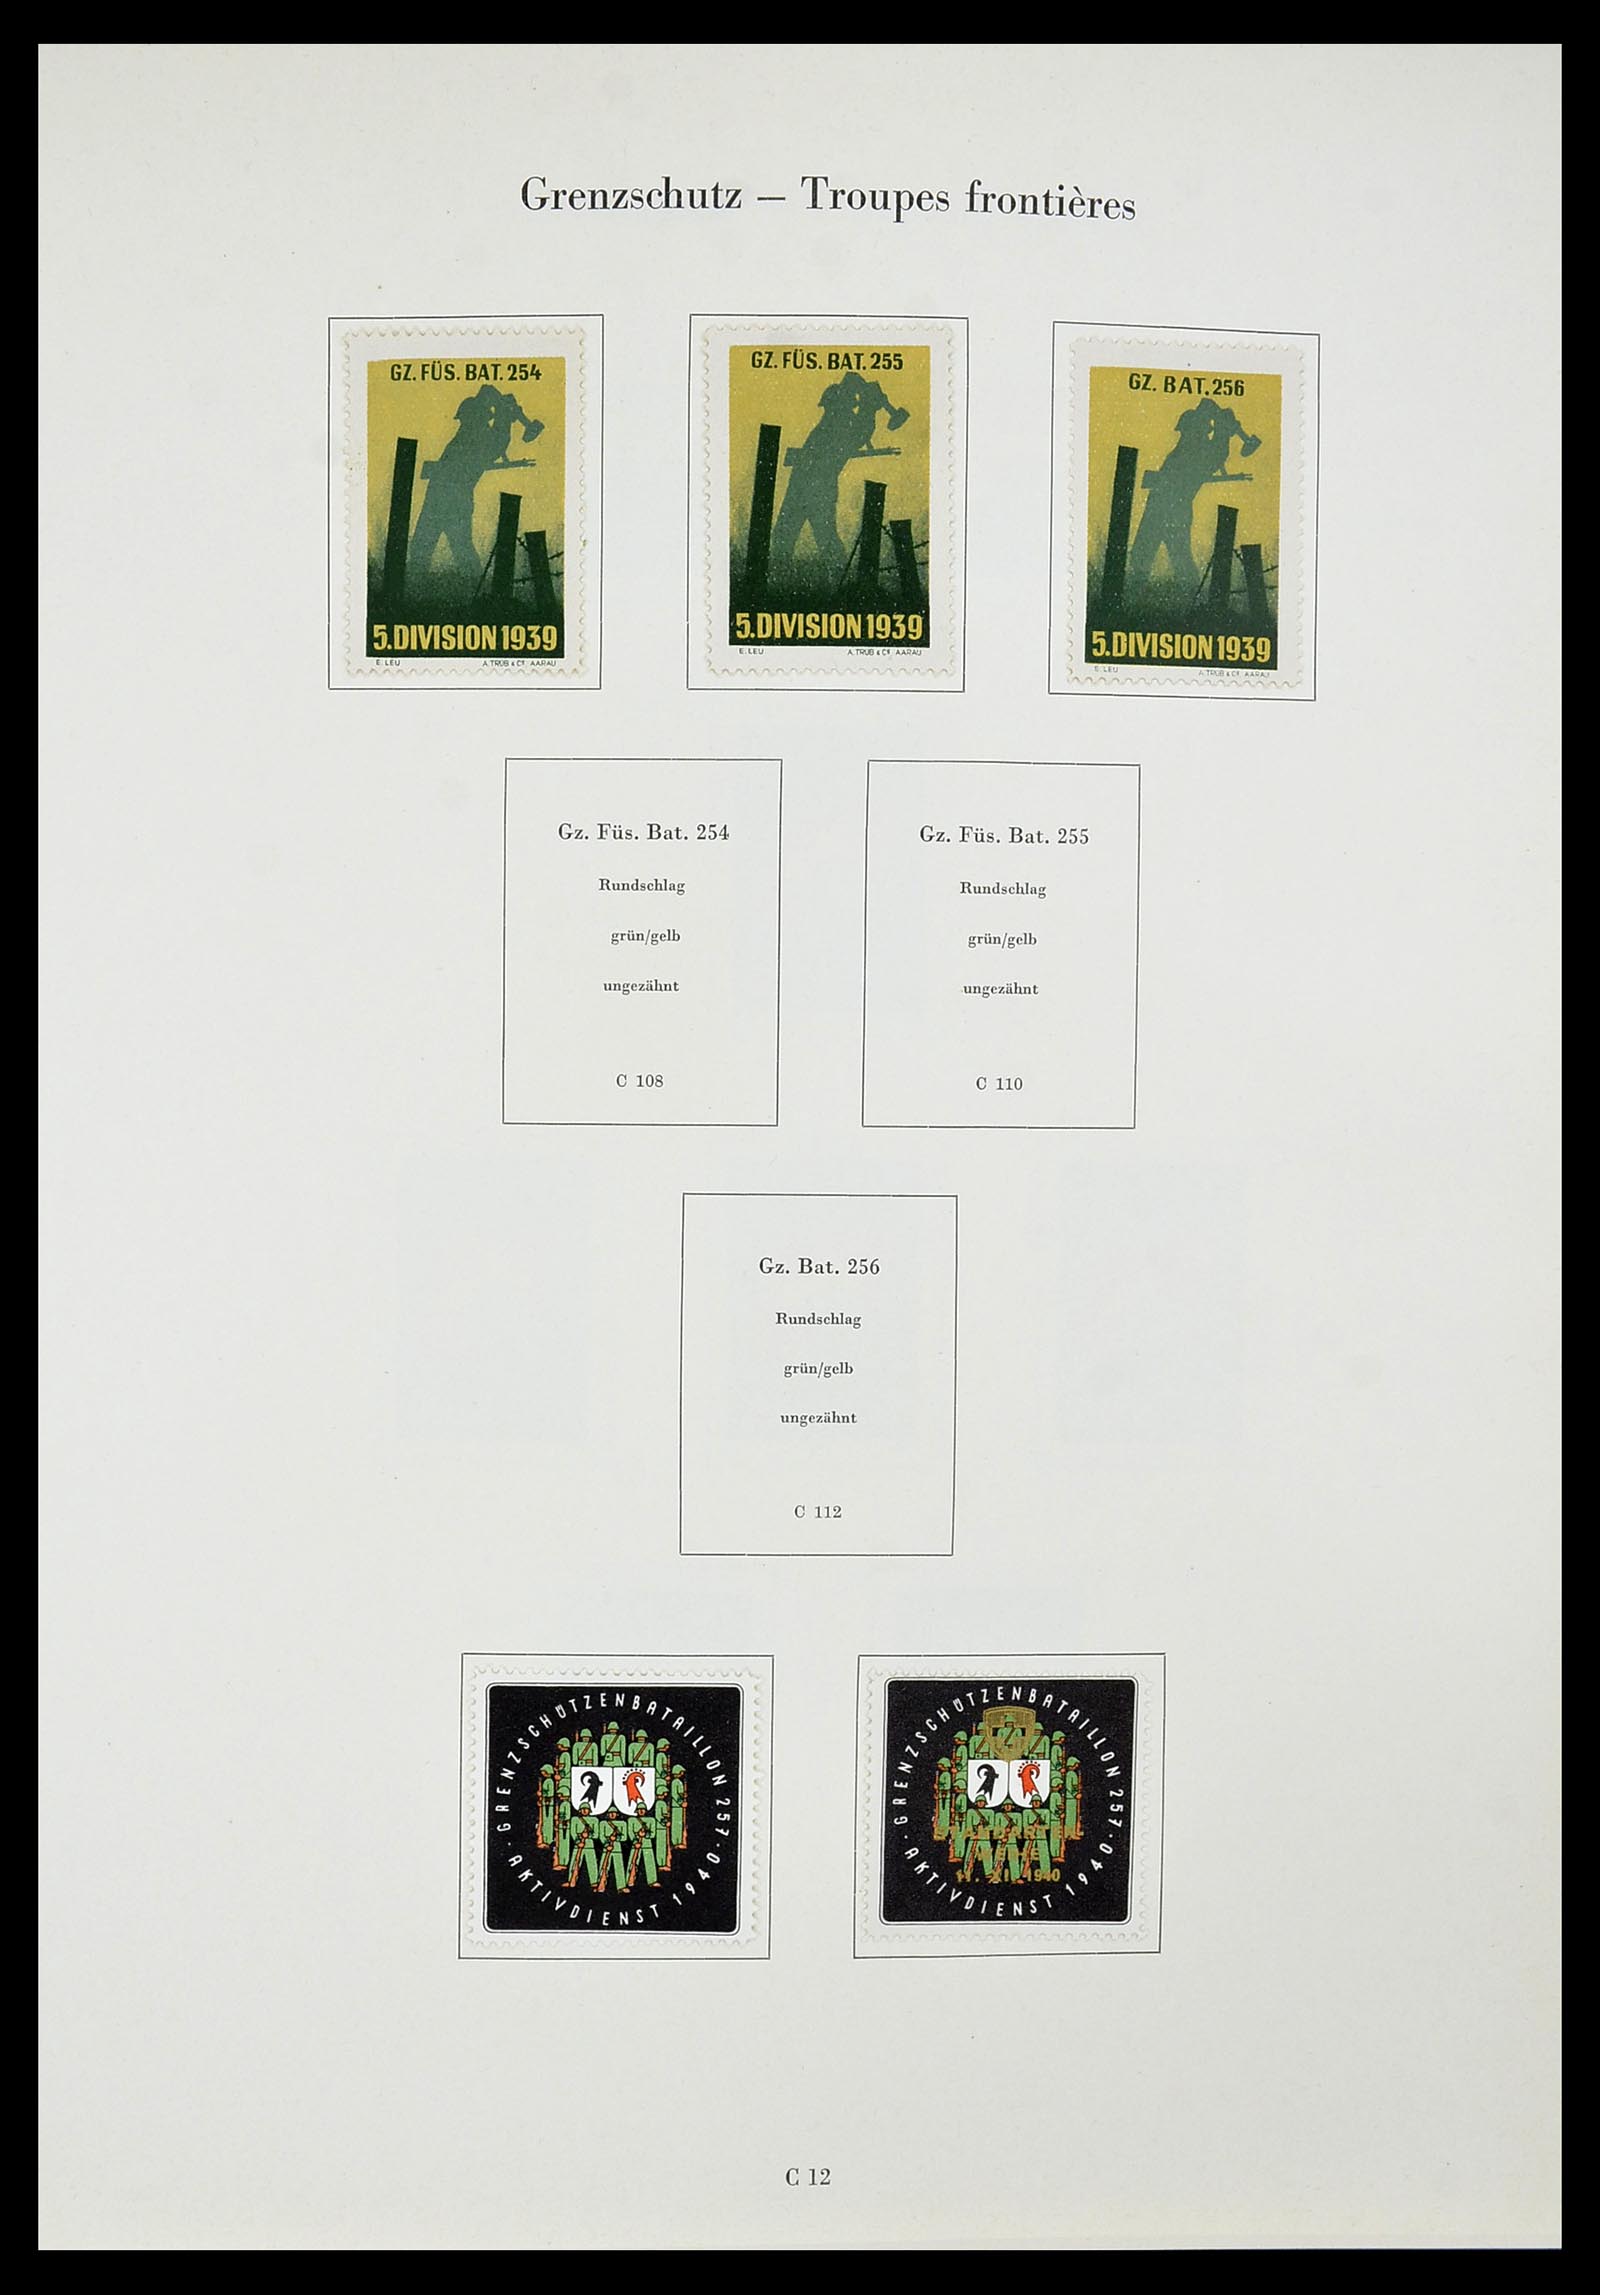 34234 097 - Stamp collection 34234 Switzerland soldier stamps 1939-1945.